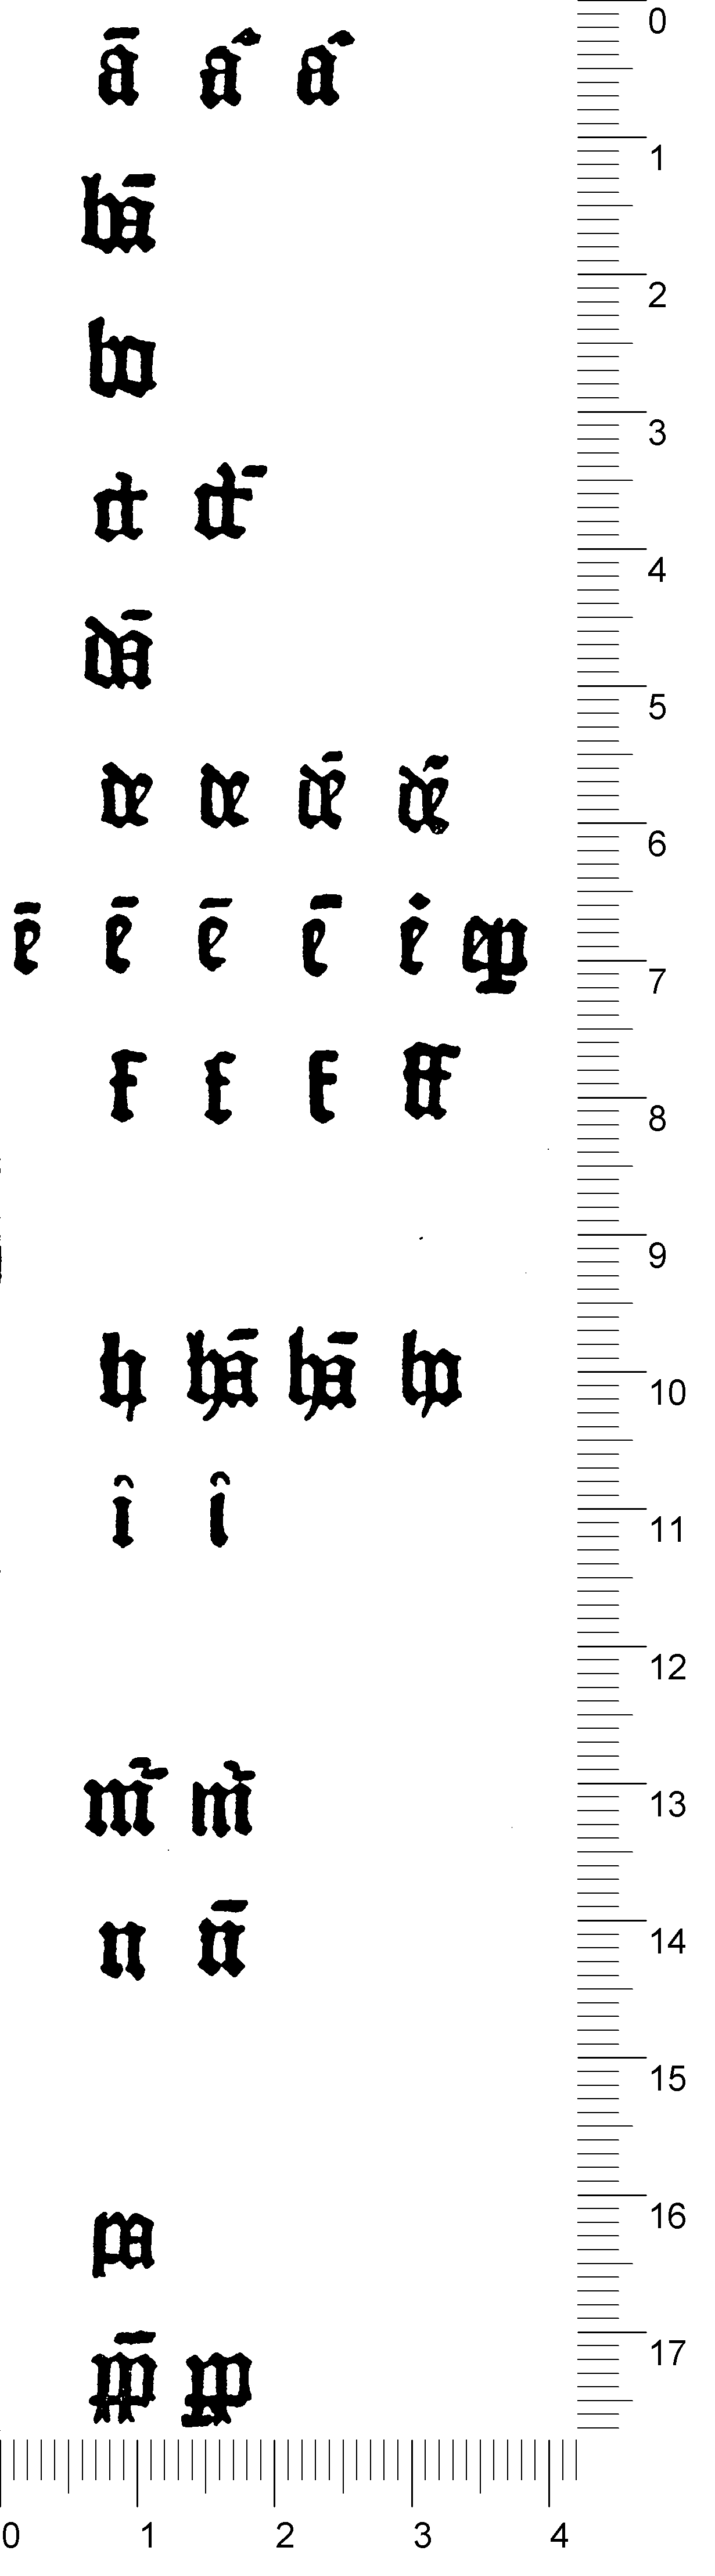 Abbildung der GfT-Tafeln vonGfT1528.2